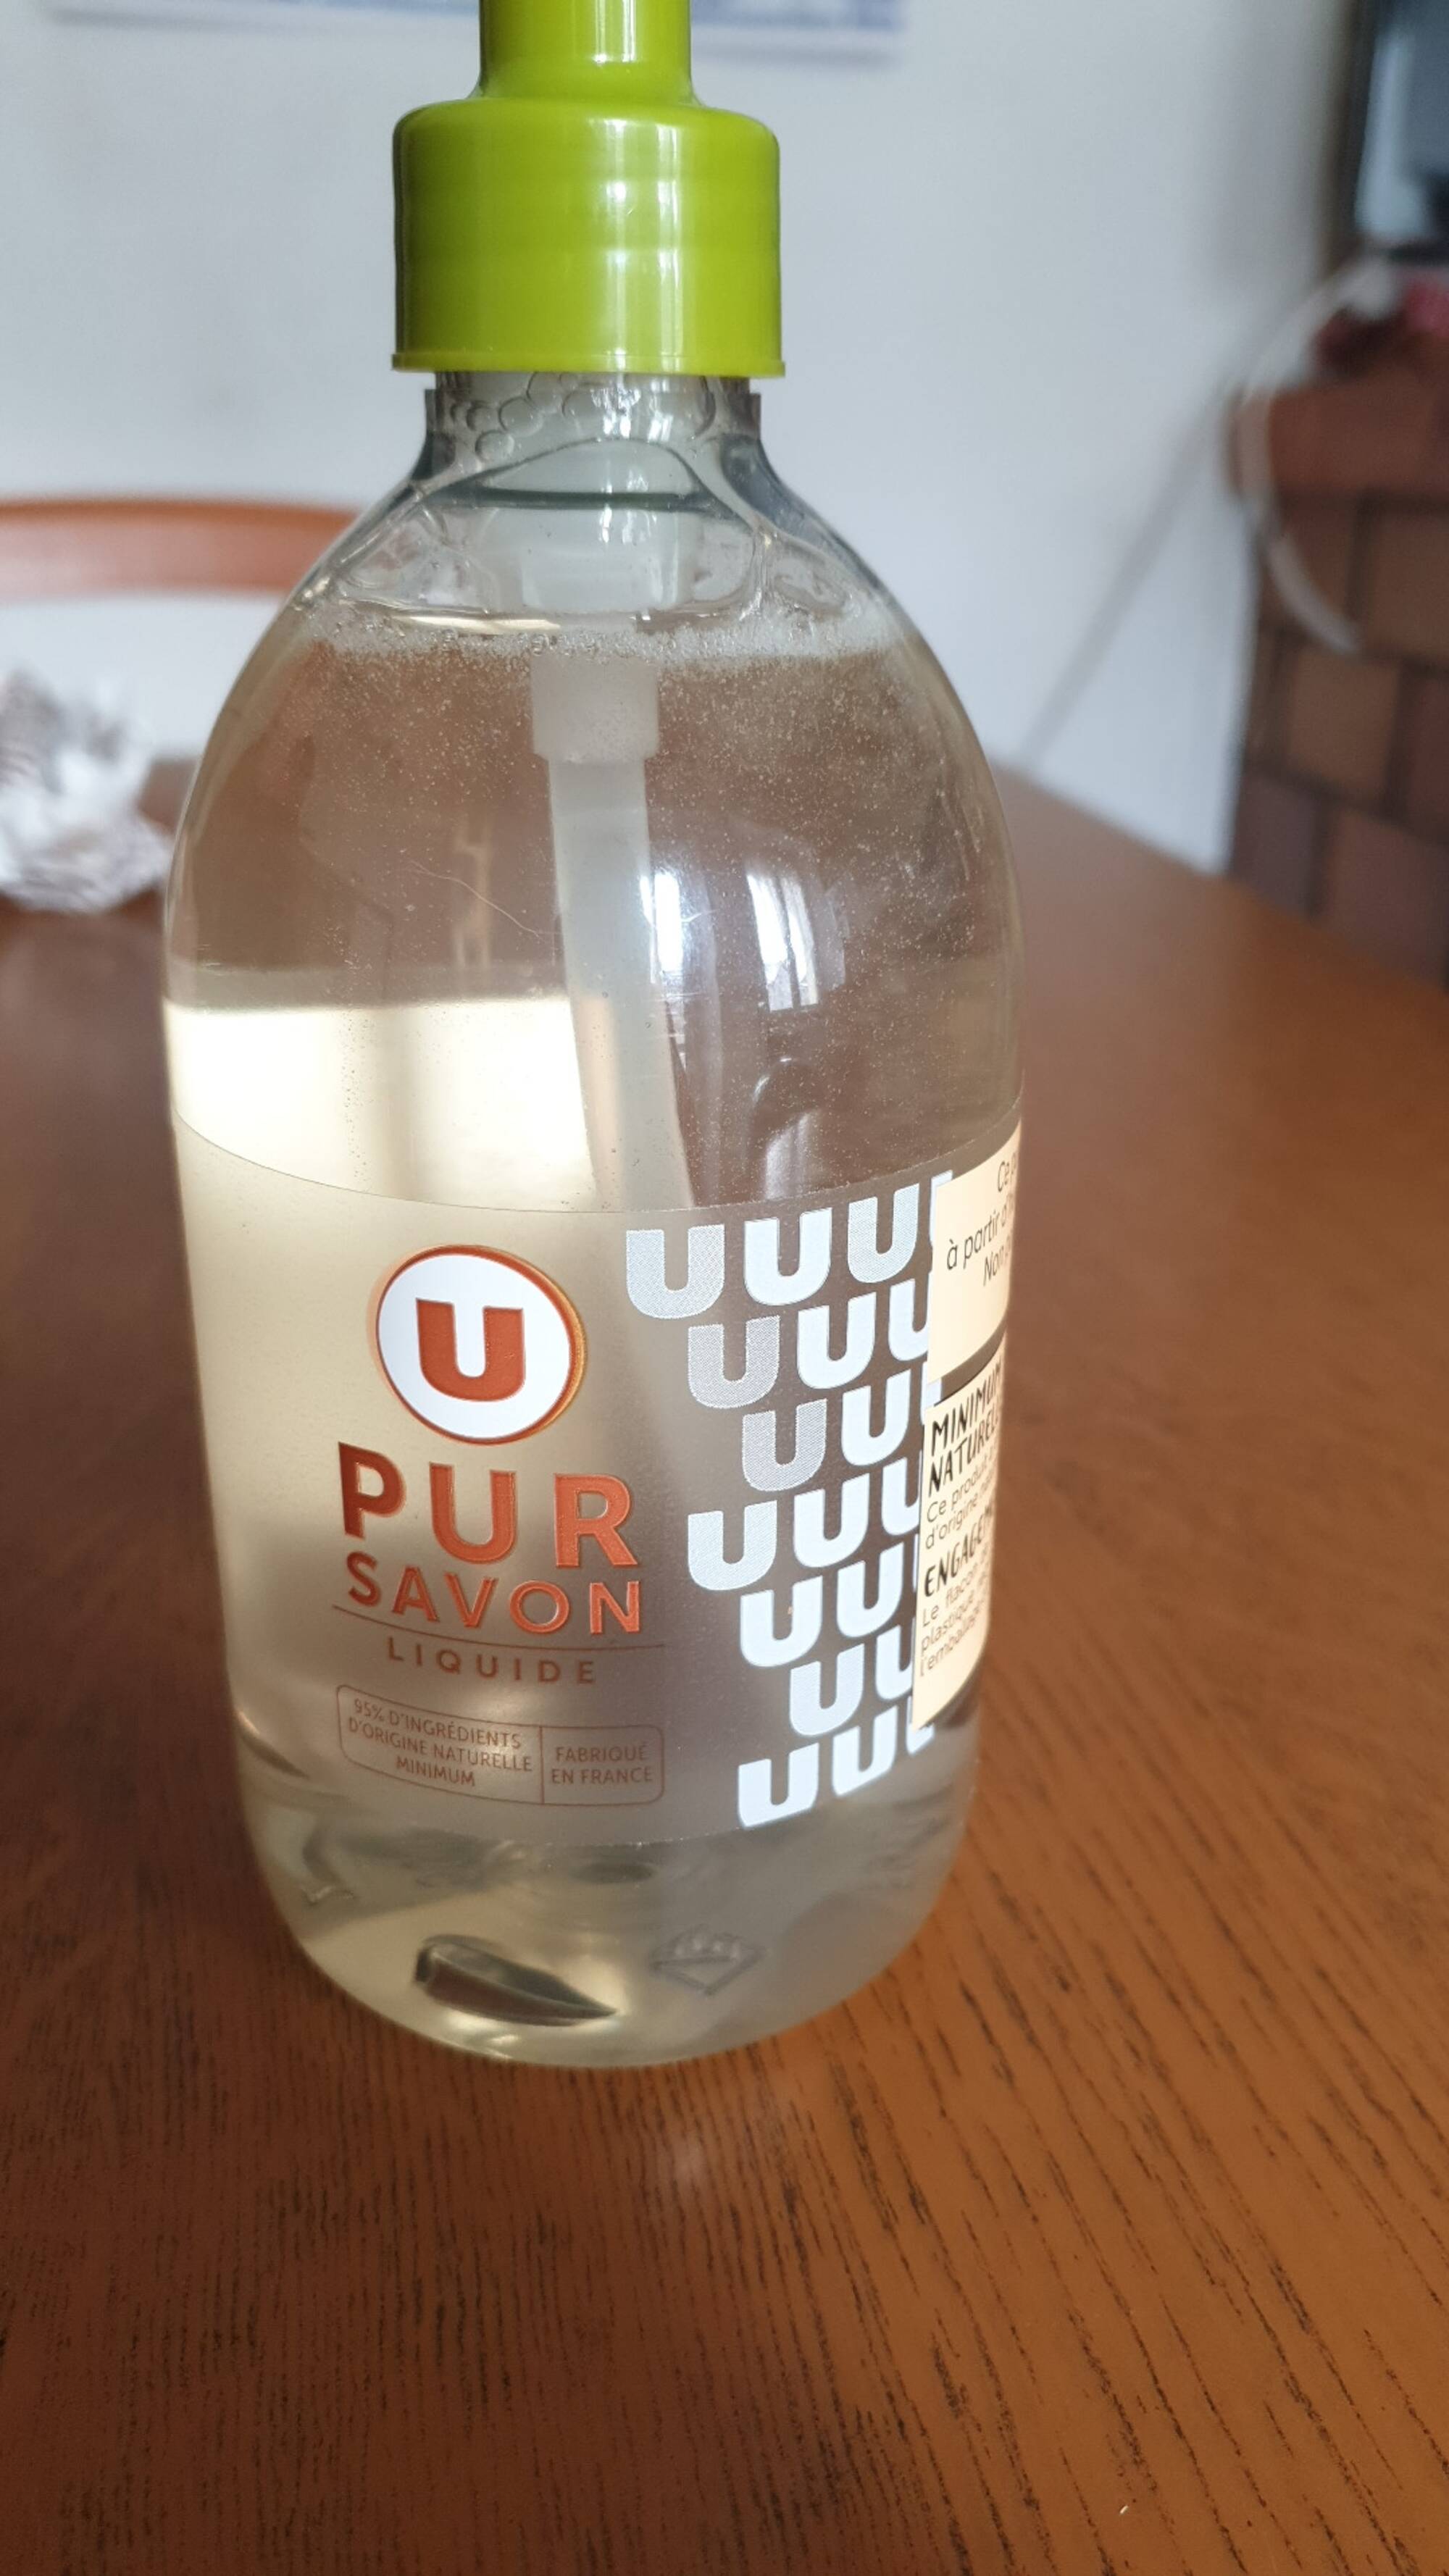 U - Pur savon liquide mains